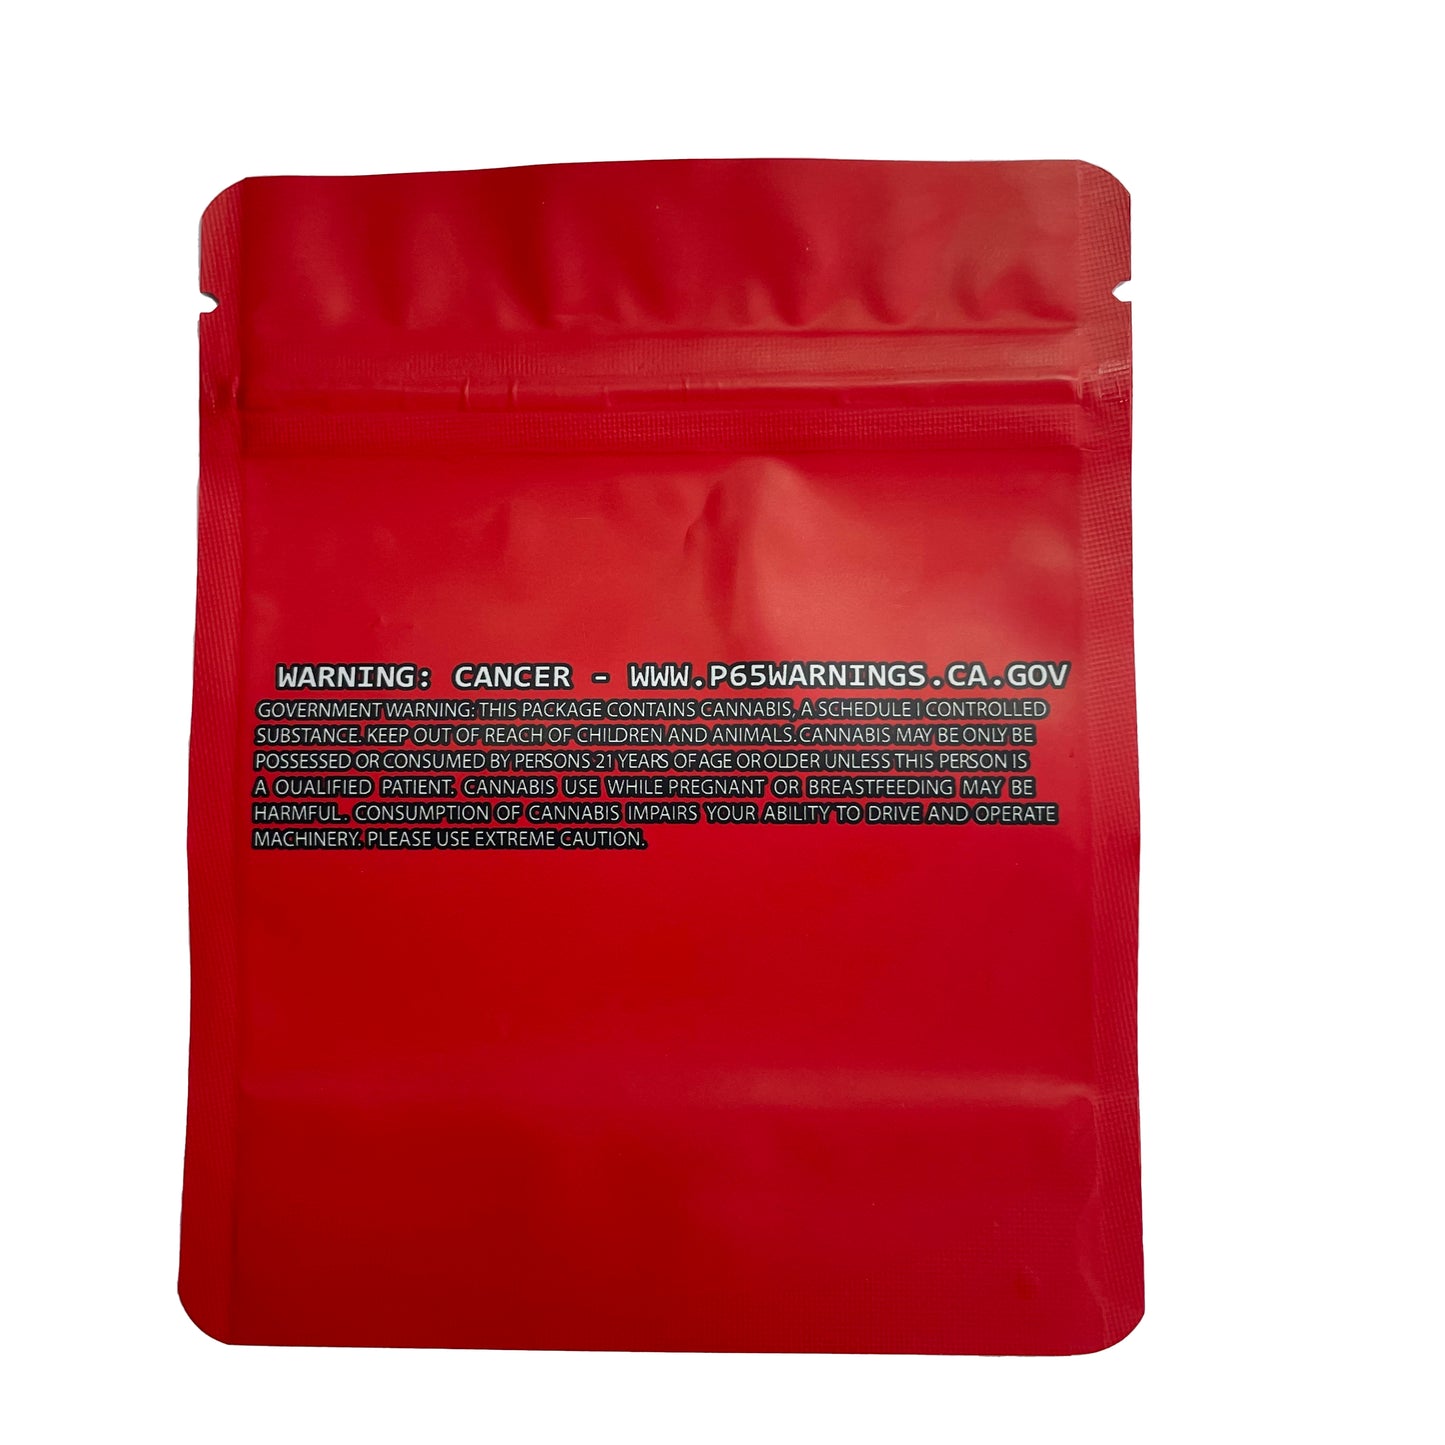 Top Tier Gummy Frunaz 3.5G Mylar Bags